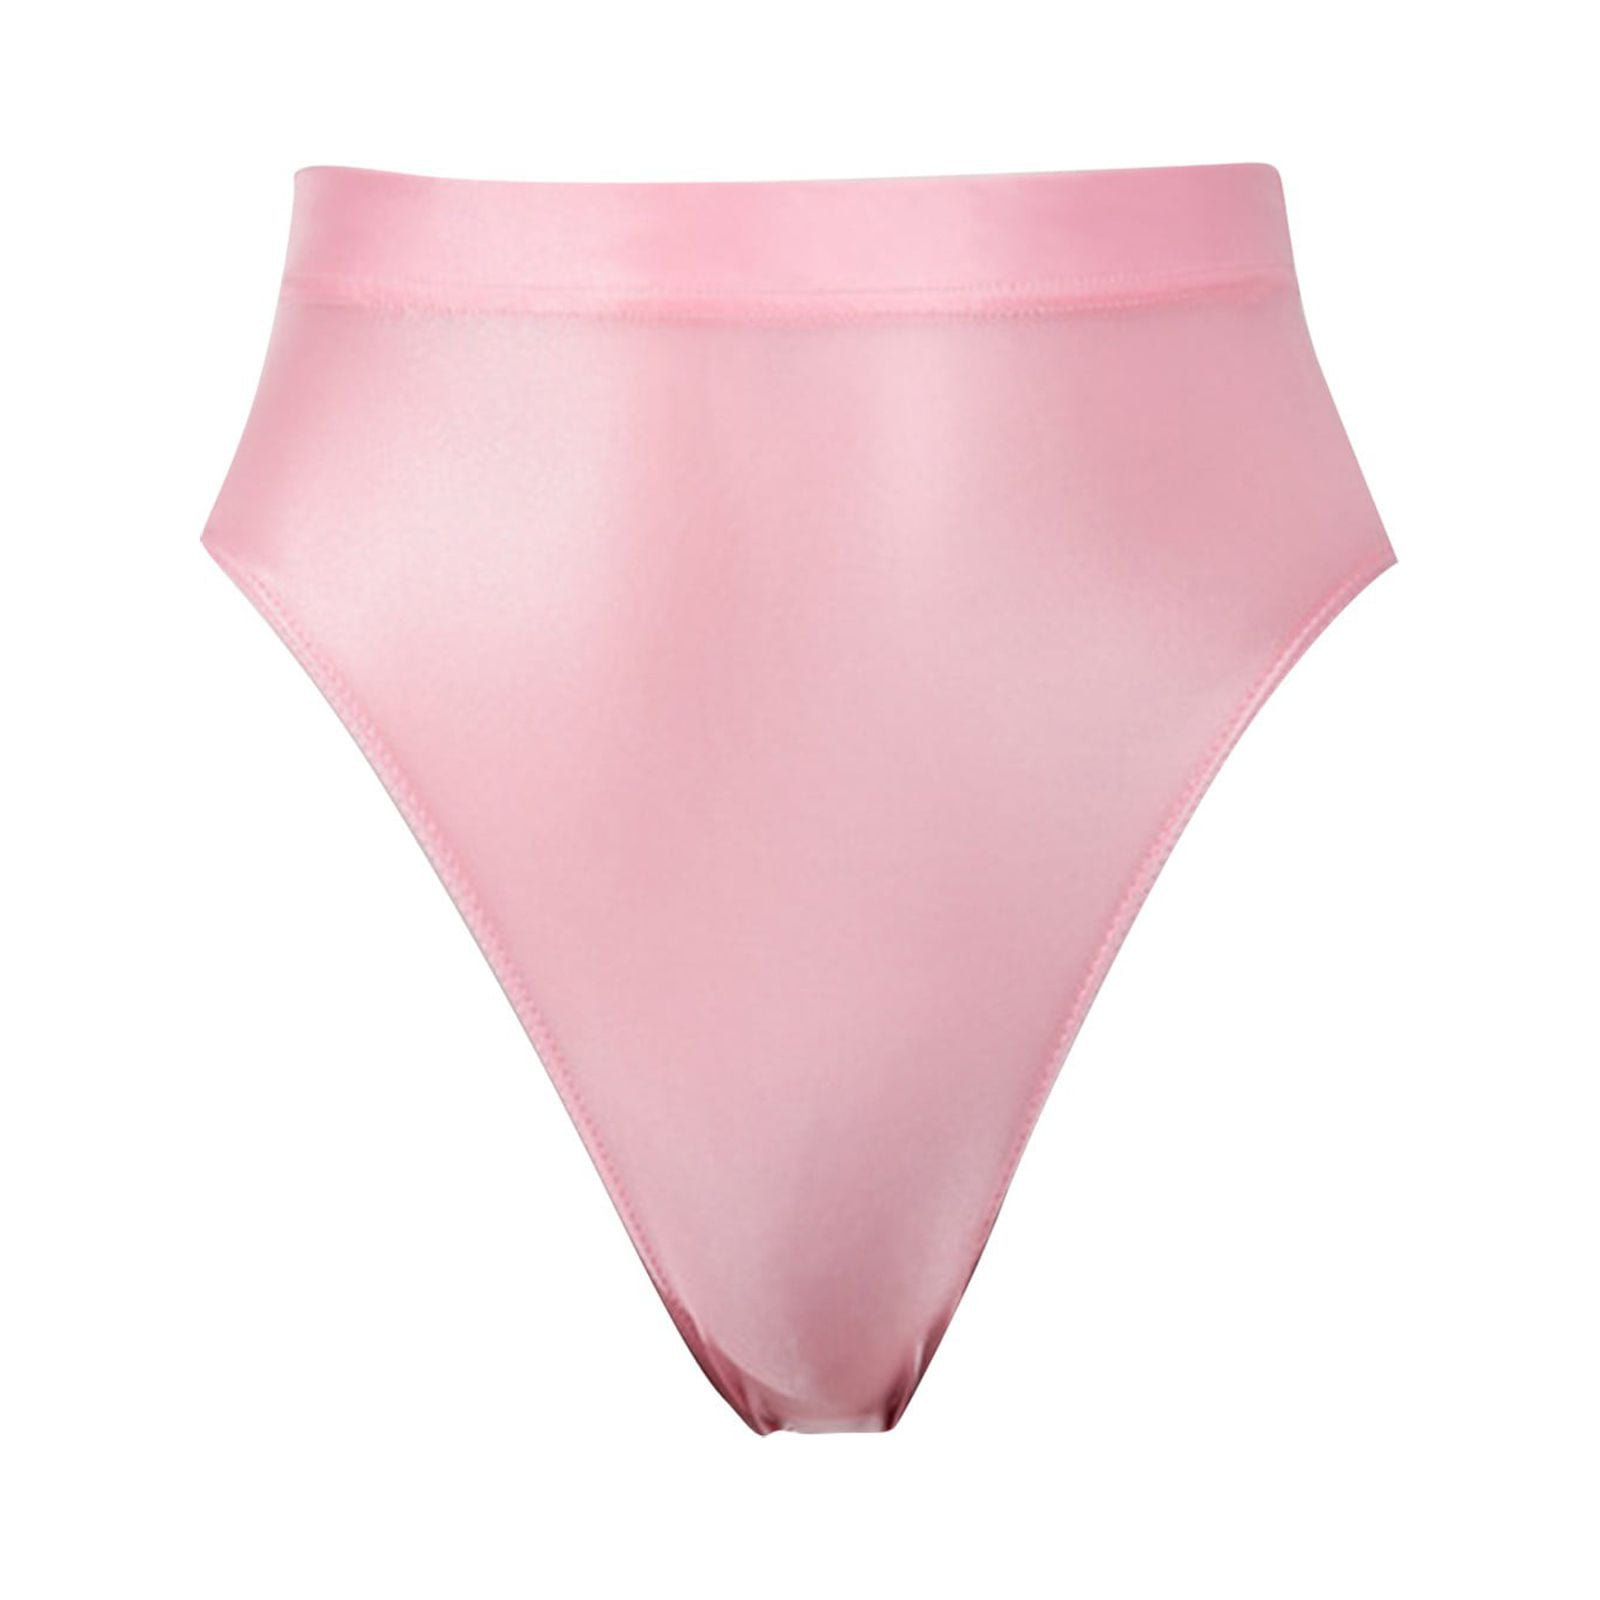 CLZOUD Underwear for Women Panties Pink Nylon Spandex Super Thin